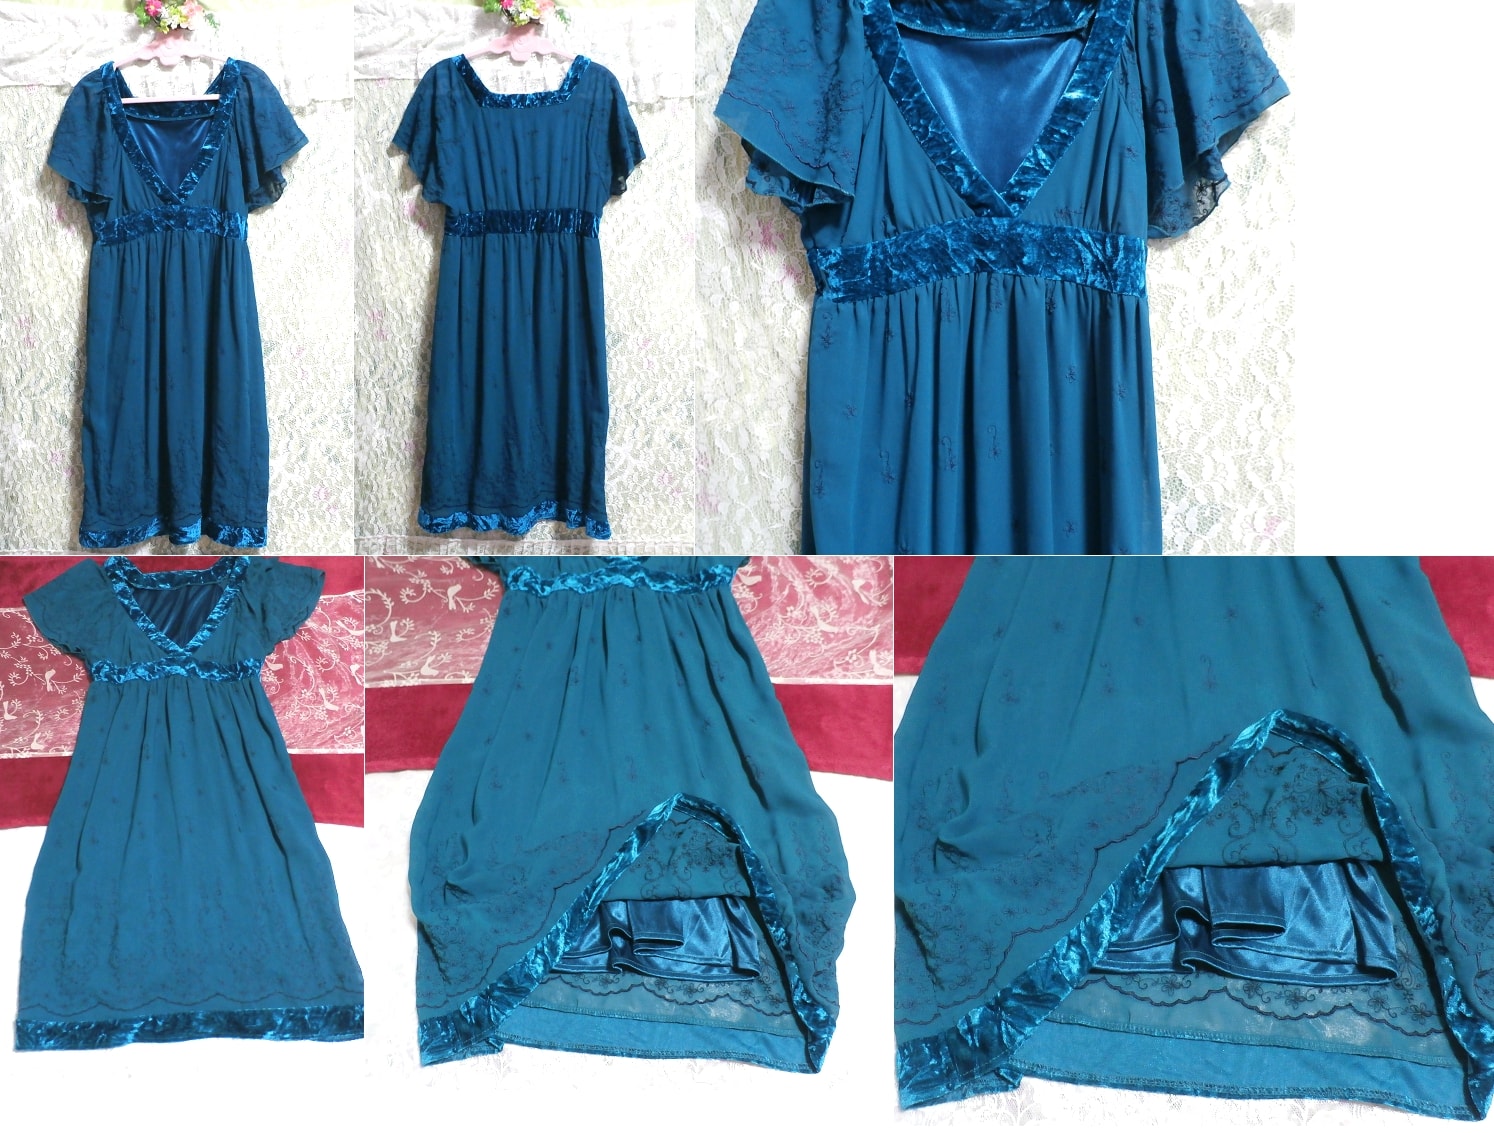 Deep teal blue green v neck negligee nightgown dress tunic dress, knee length skirt, m size